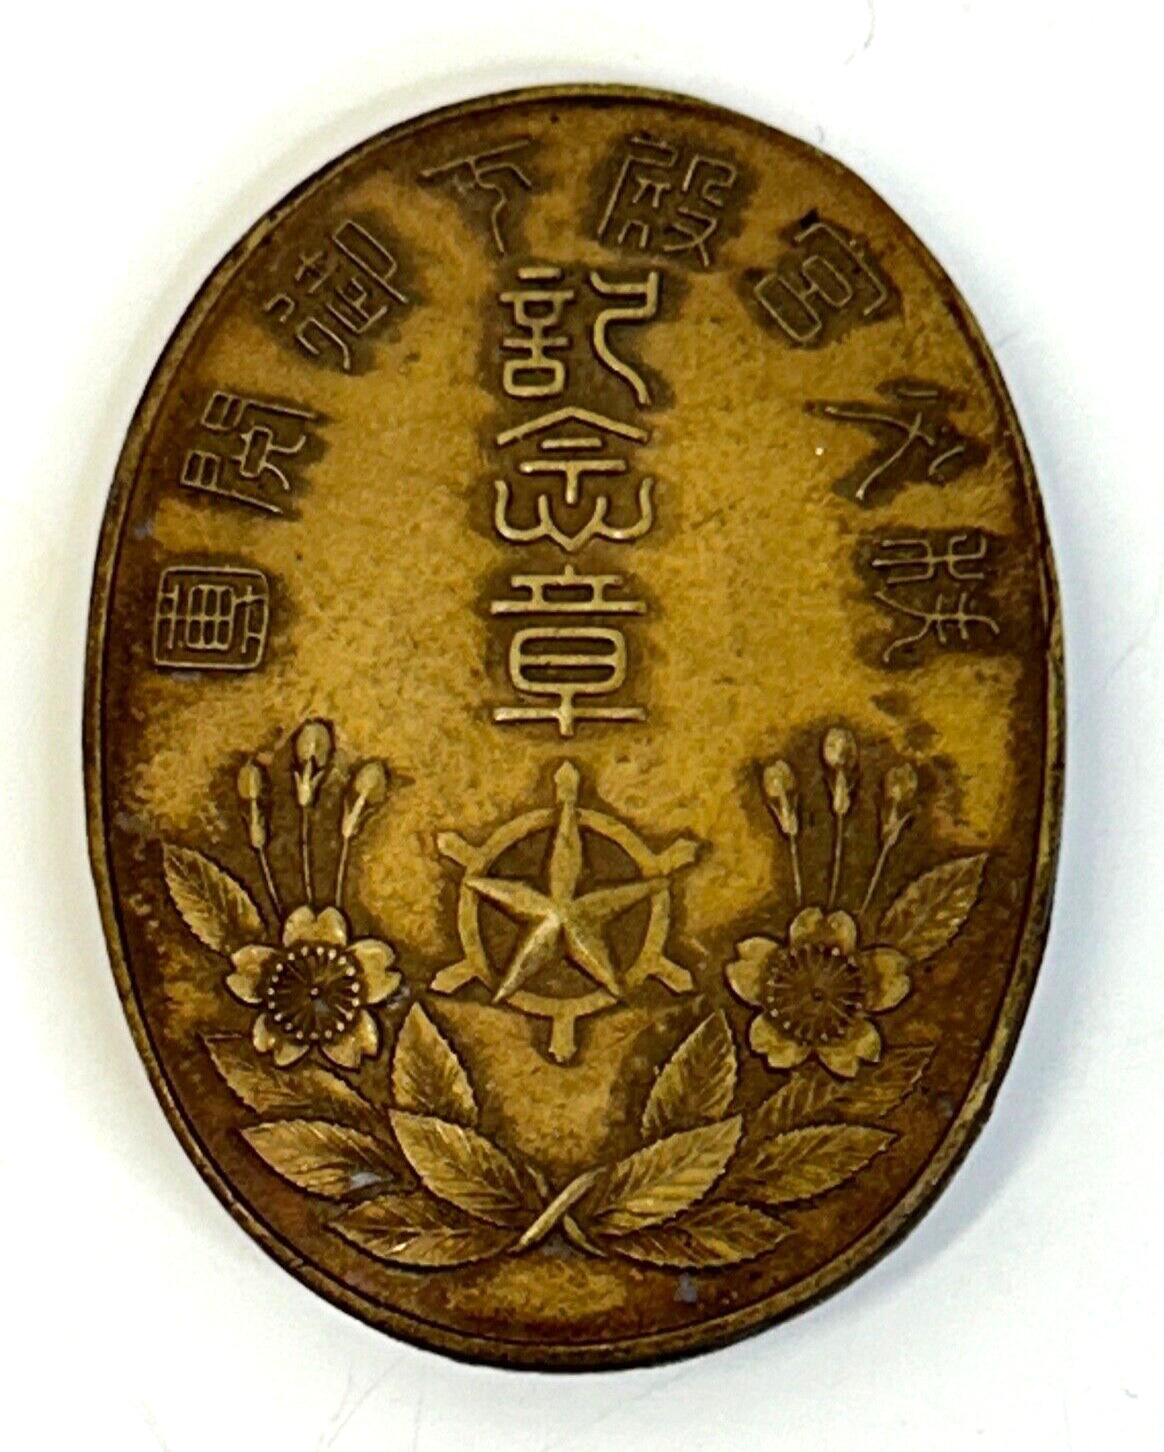 Unknown Vintage Japanese Commemorative Medal